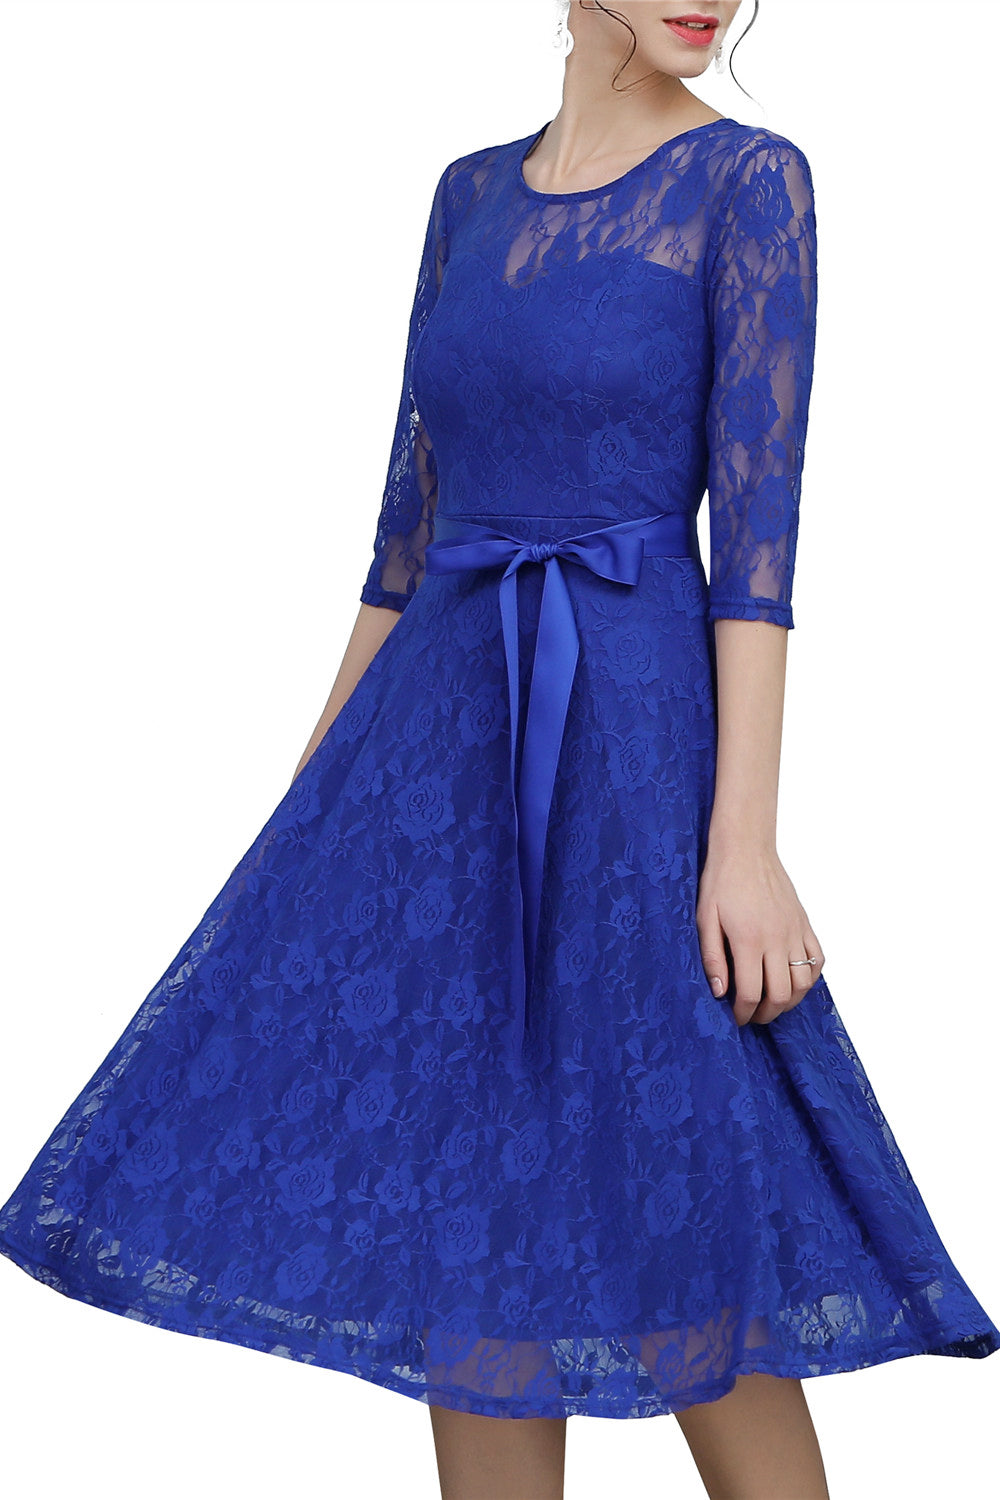 Royal Blue A Line Round Neck Midi Lace Semi Formal Party Dress 